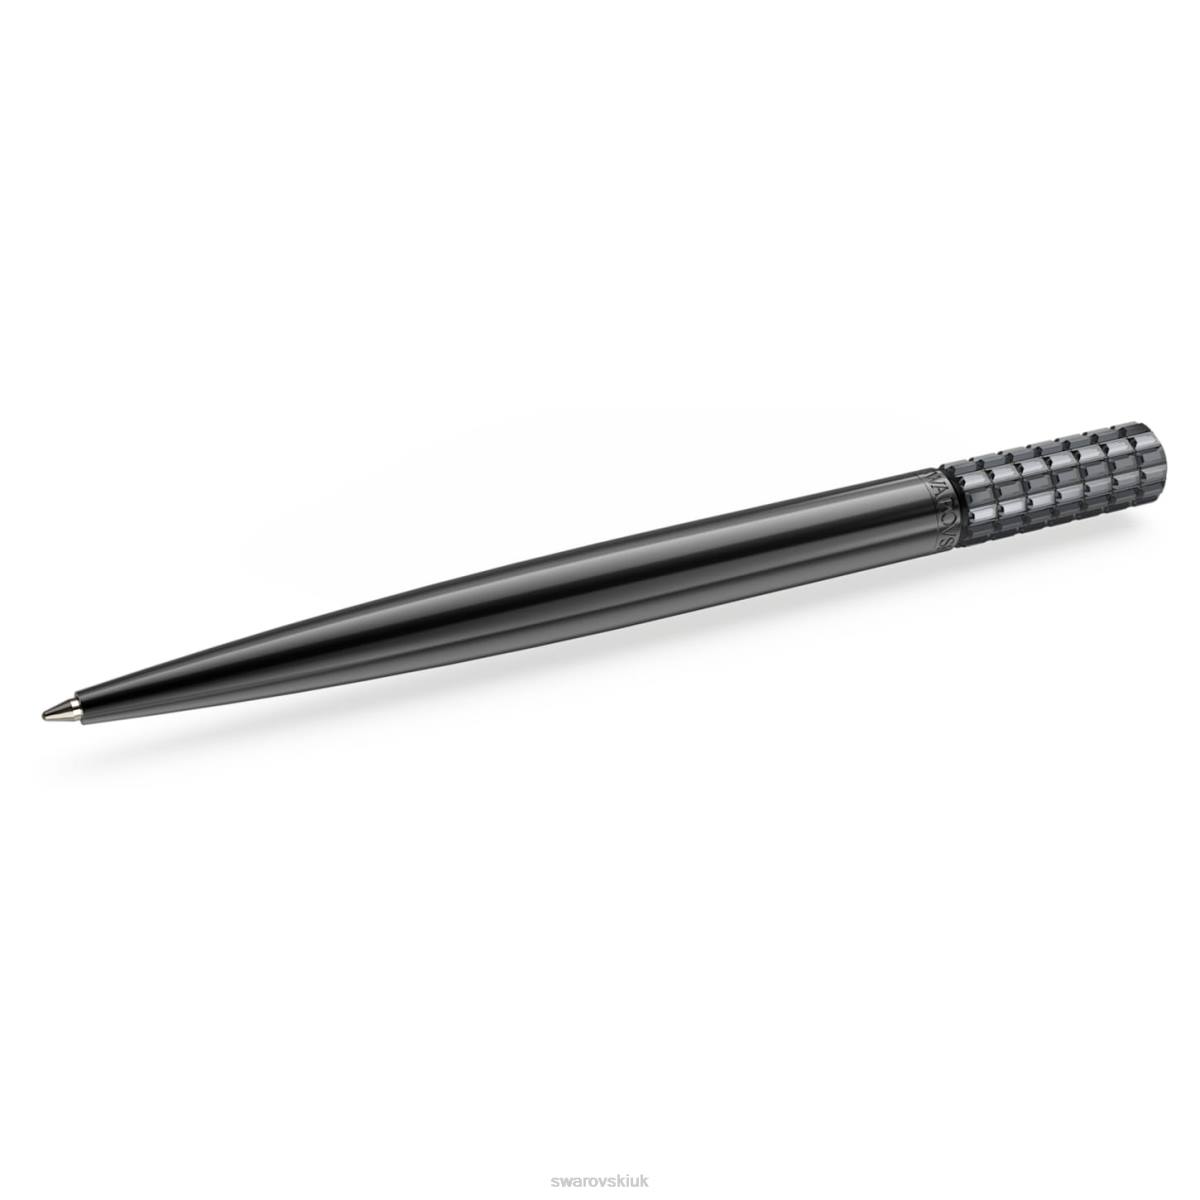 Accessories Swarovski Ballpoint pen Black, Black lacquered 48JX1268